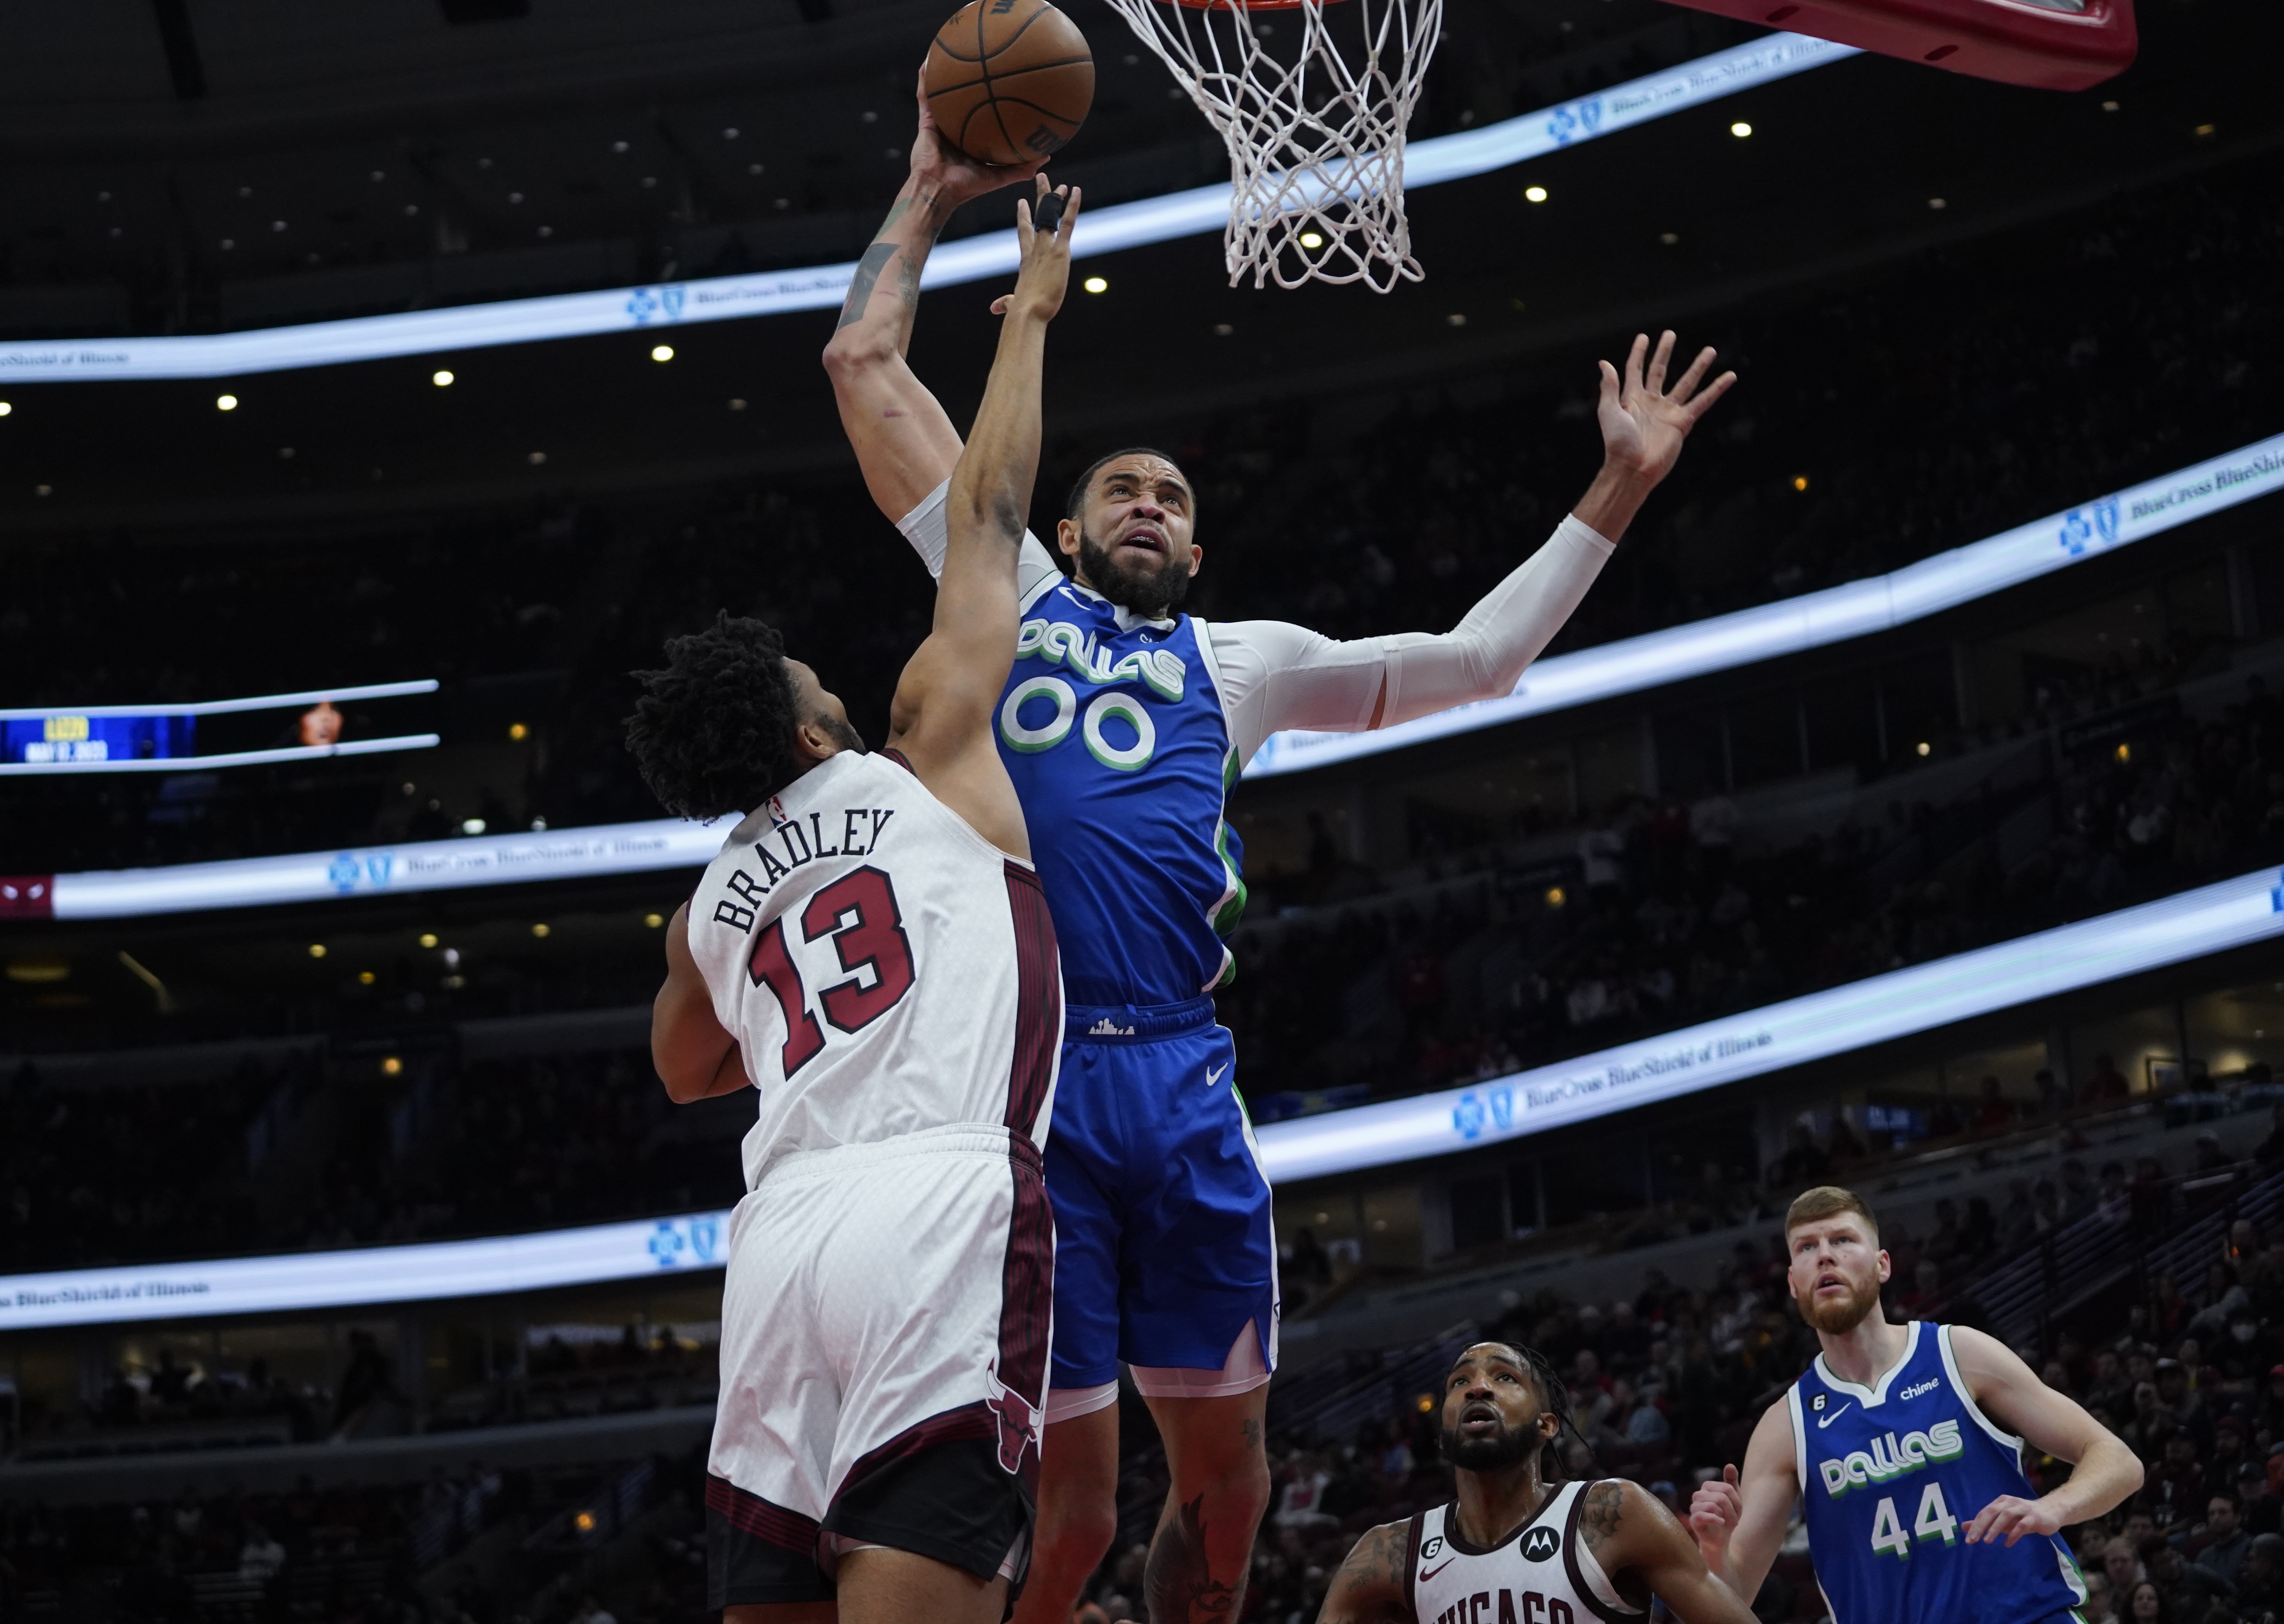 NBA: Dallas Mavericks at Chicago Bulls